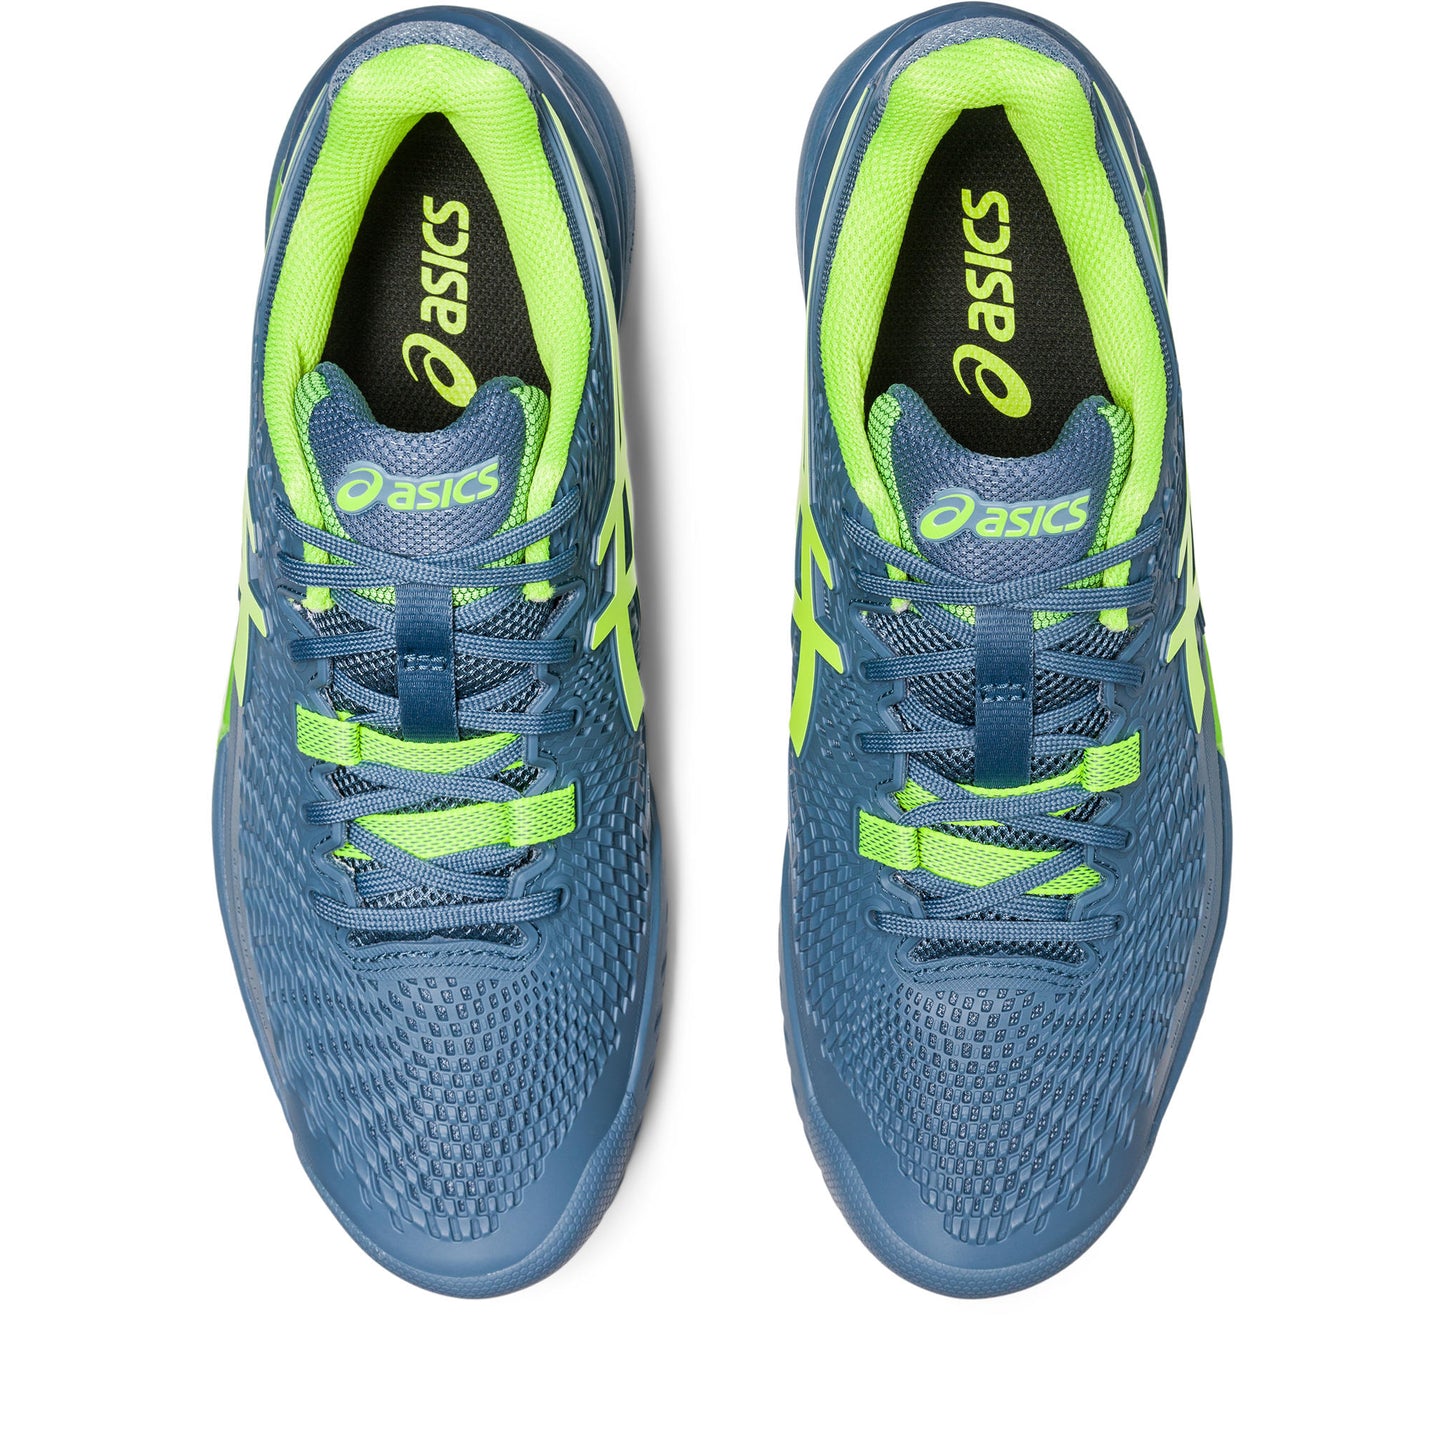 Asics Gel Resolution 9 Men tennis shoes - Steel Blue/Green 330.400